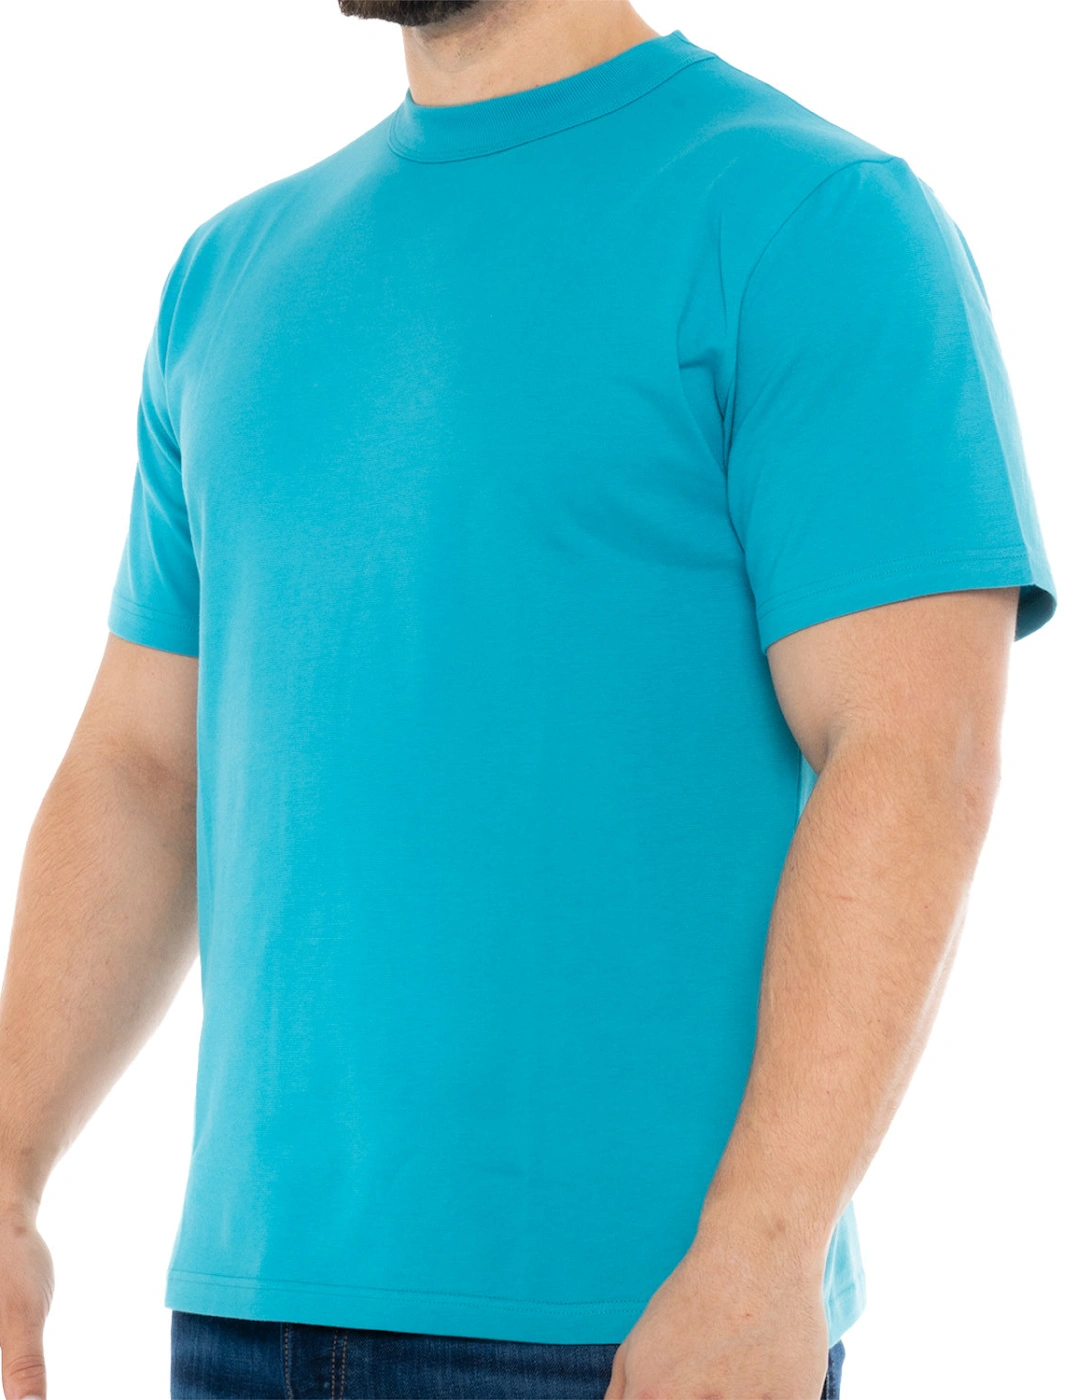 Armor Lux Mens Heritage Plain T-Shirt (Turquoise)